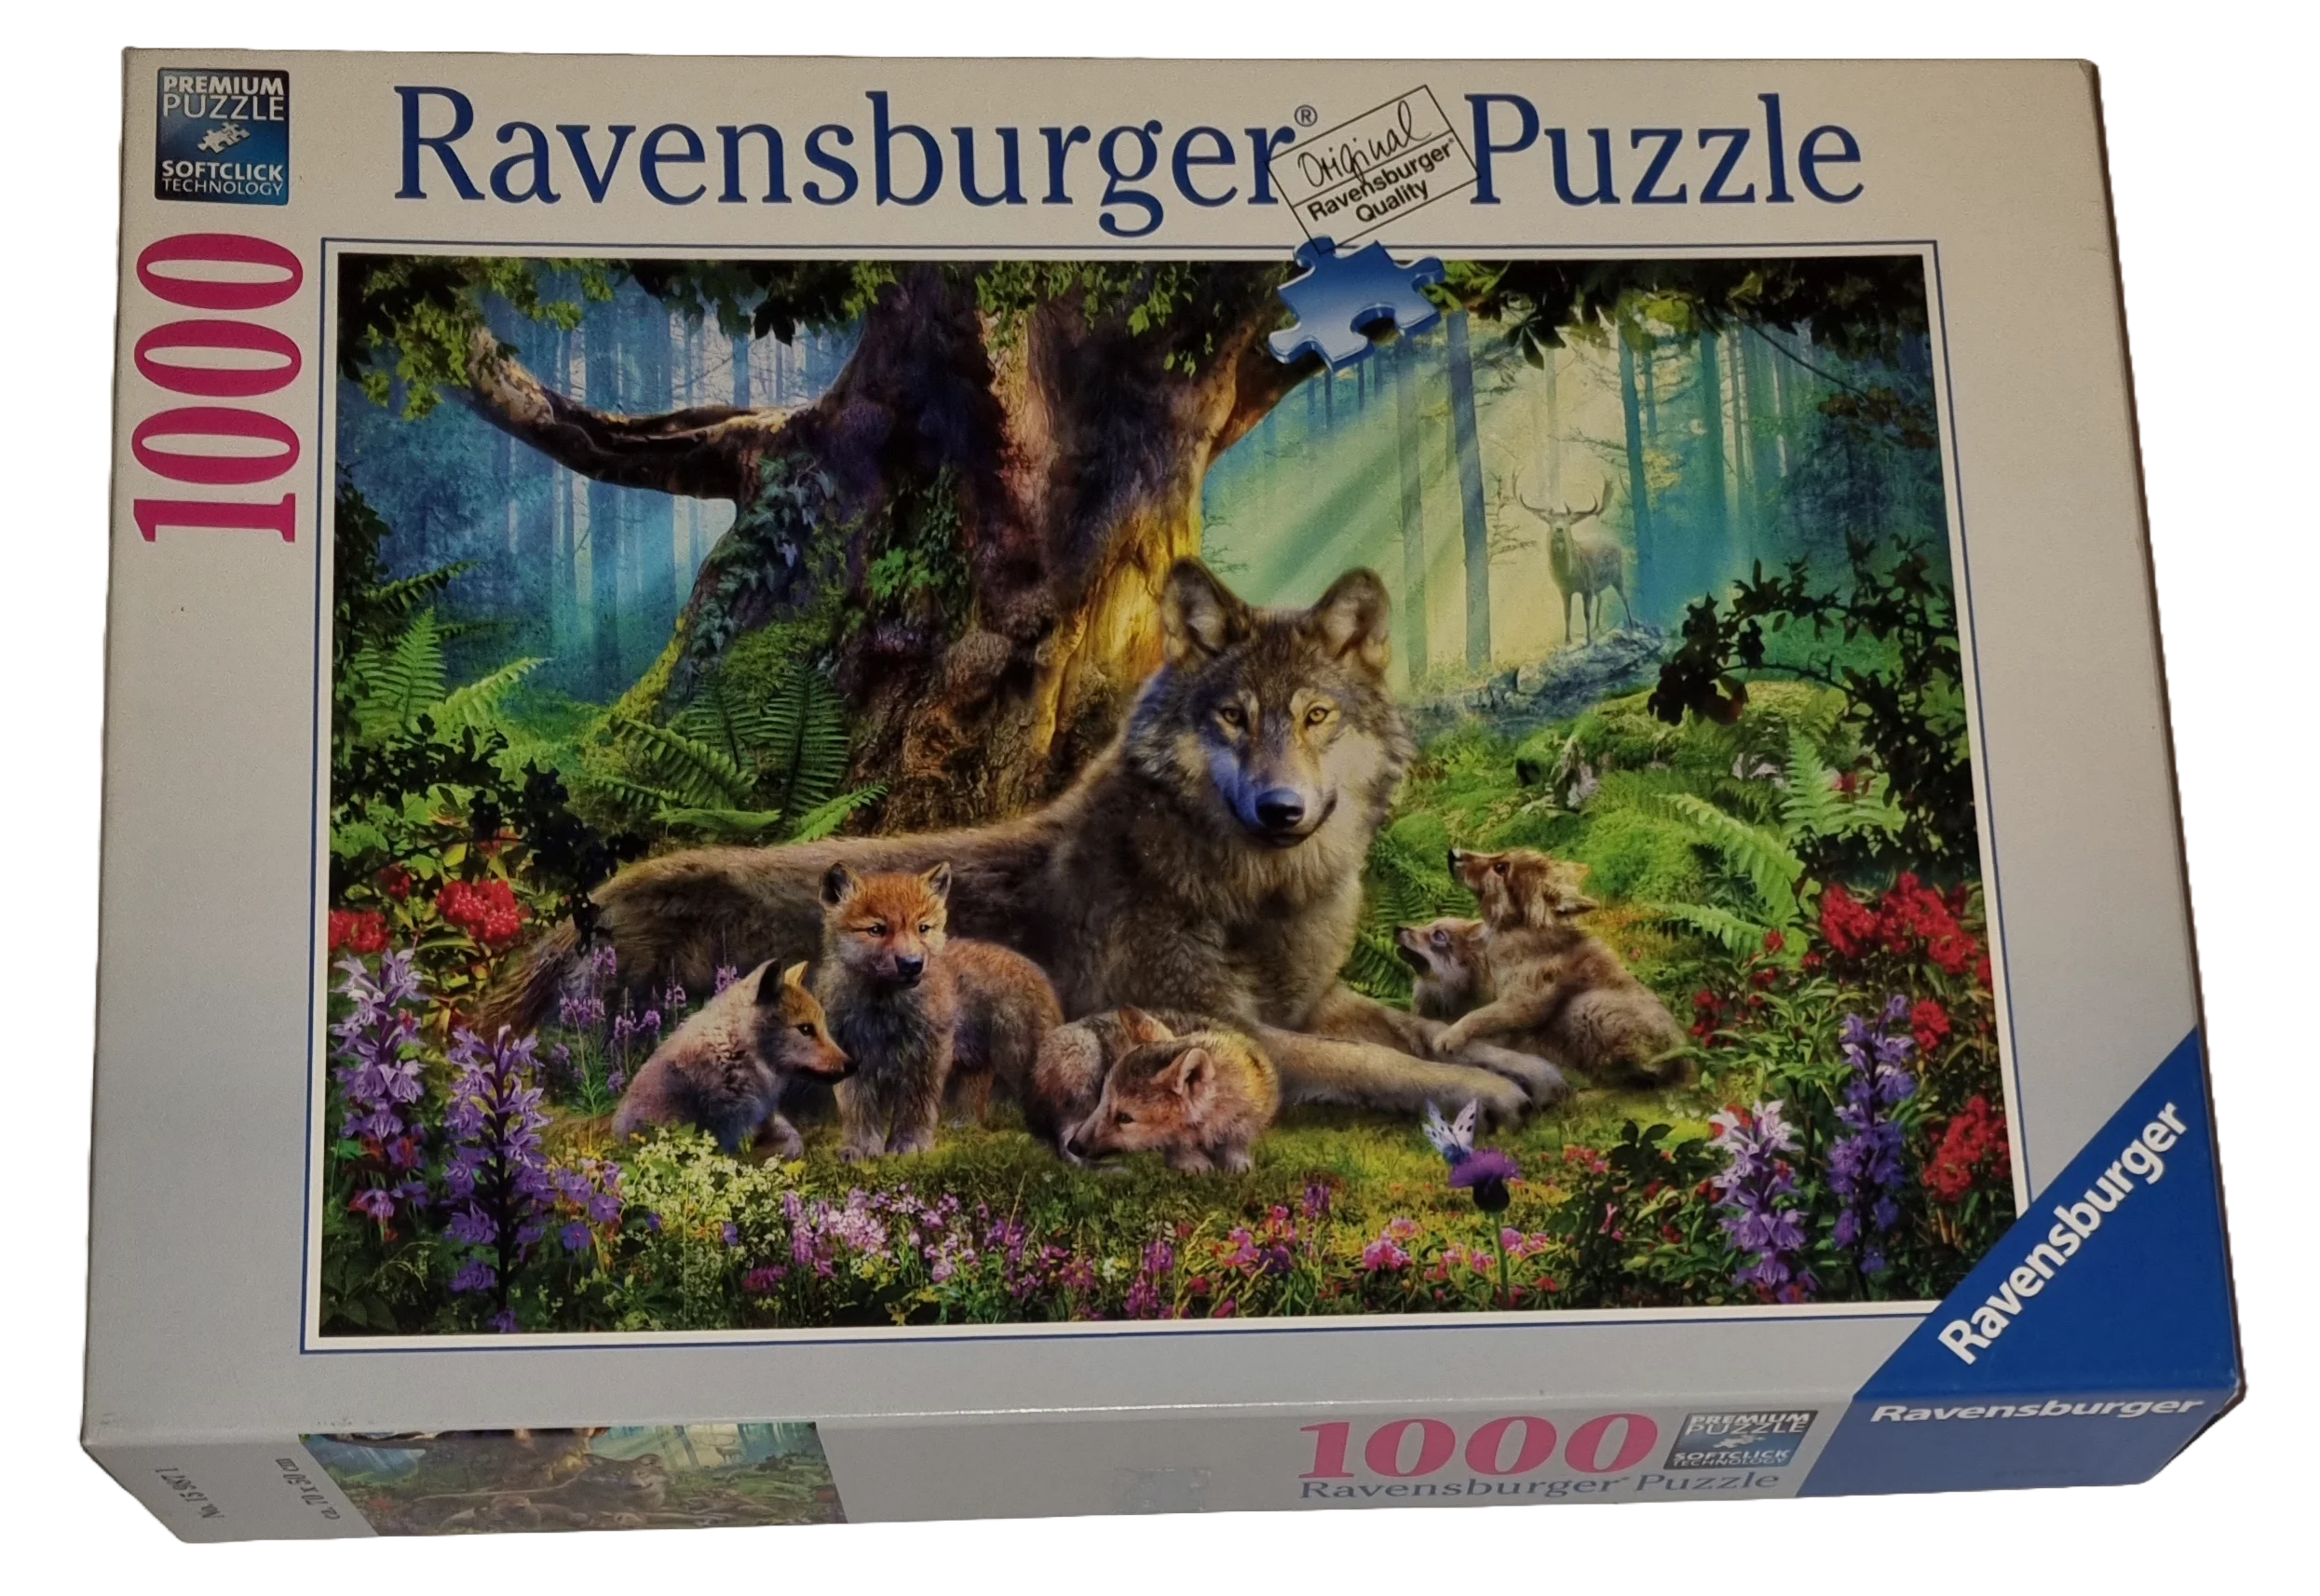 Ravensburger Puzzle Premium softclick 1000 Teile 159871 Wölfe im Wald